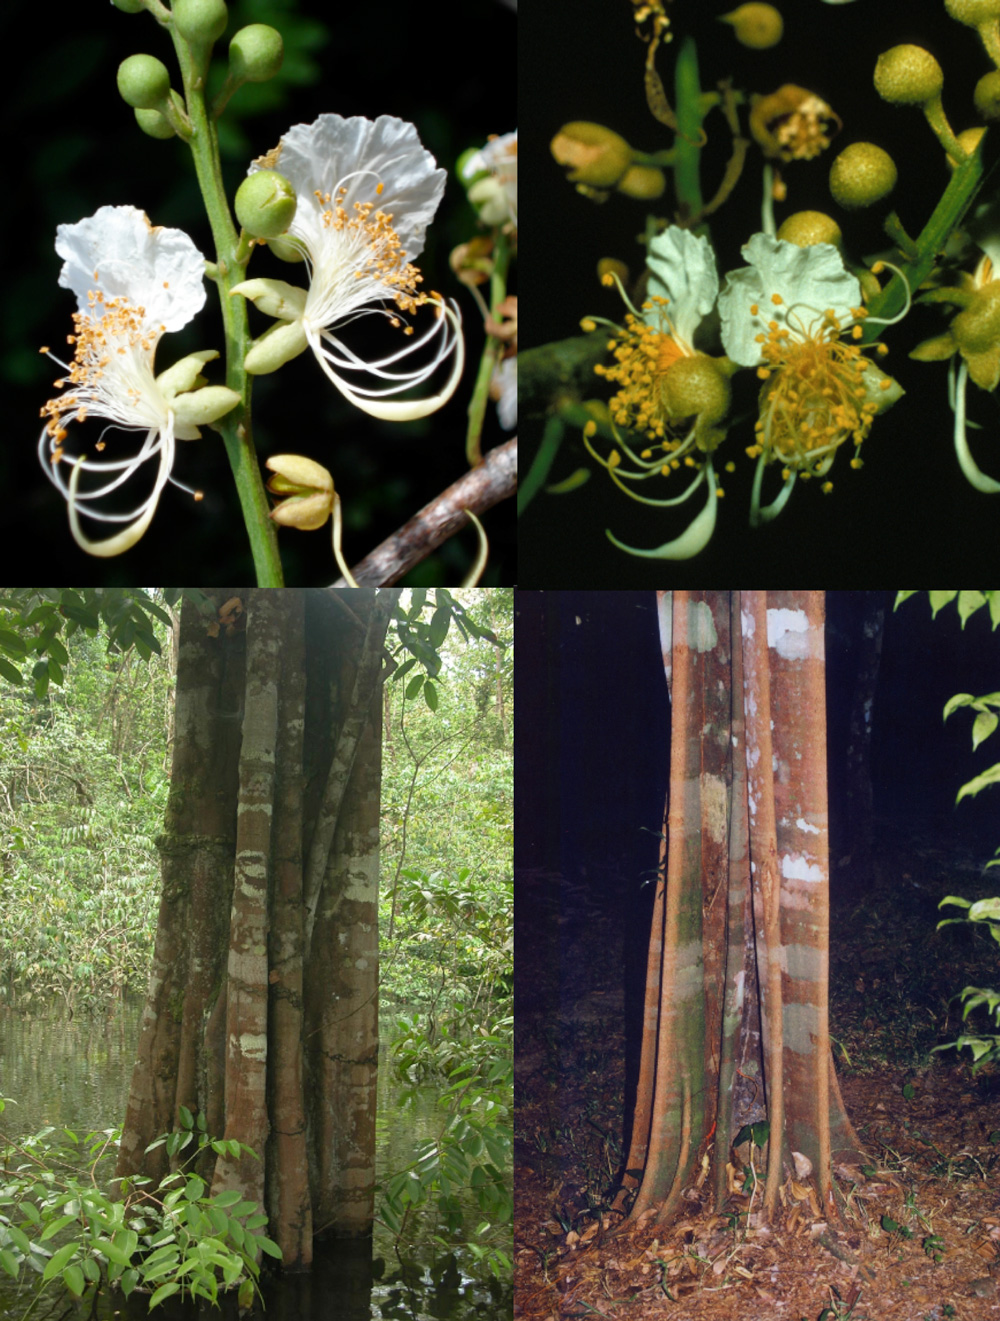 Swartzia acuminata (left) and Swartzia polyphylla (right). Photos: B. Torke (top left), The Igapo Guide Team (bottom left), S. A. Mori (top right), F. Prevost (bottom right)